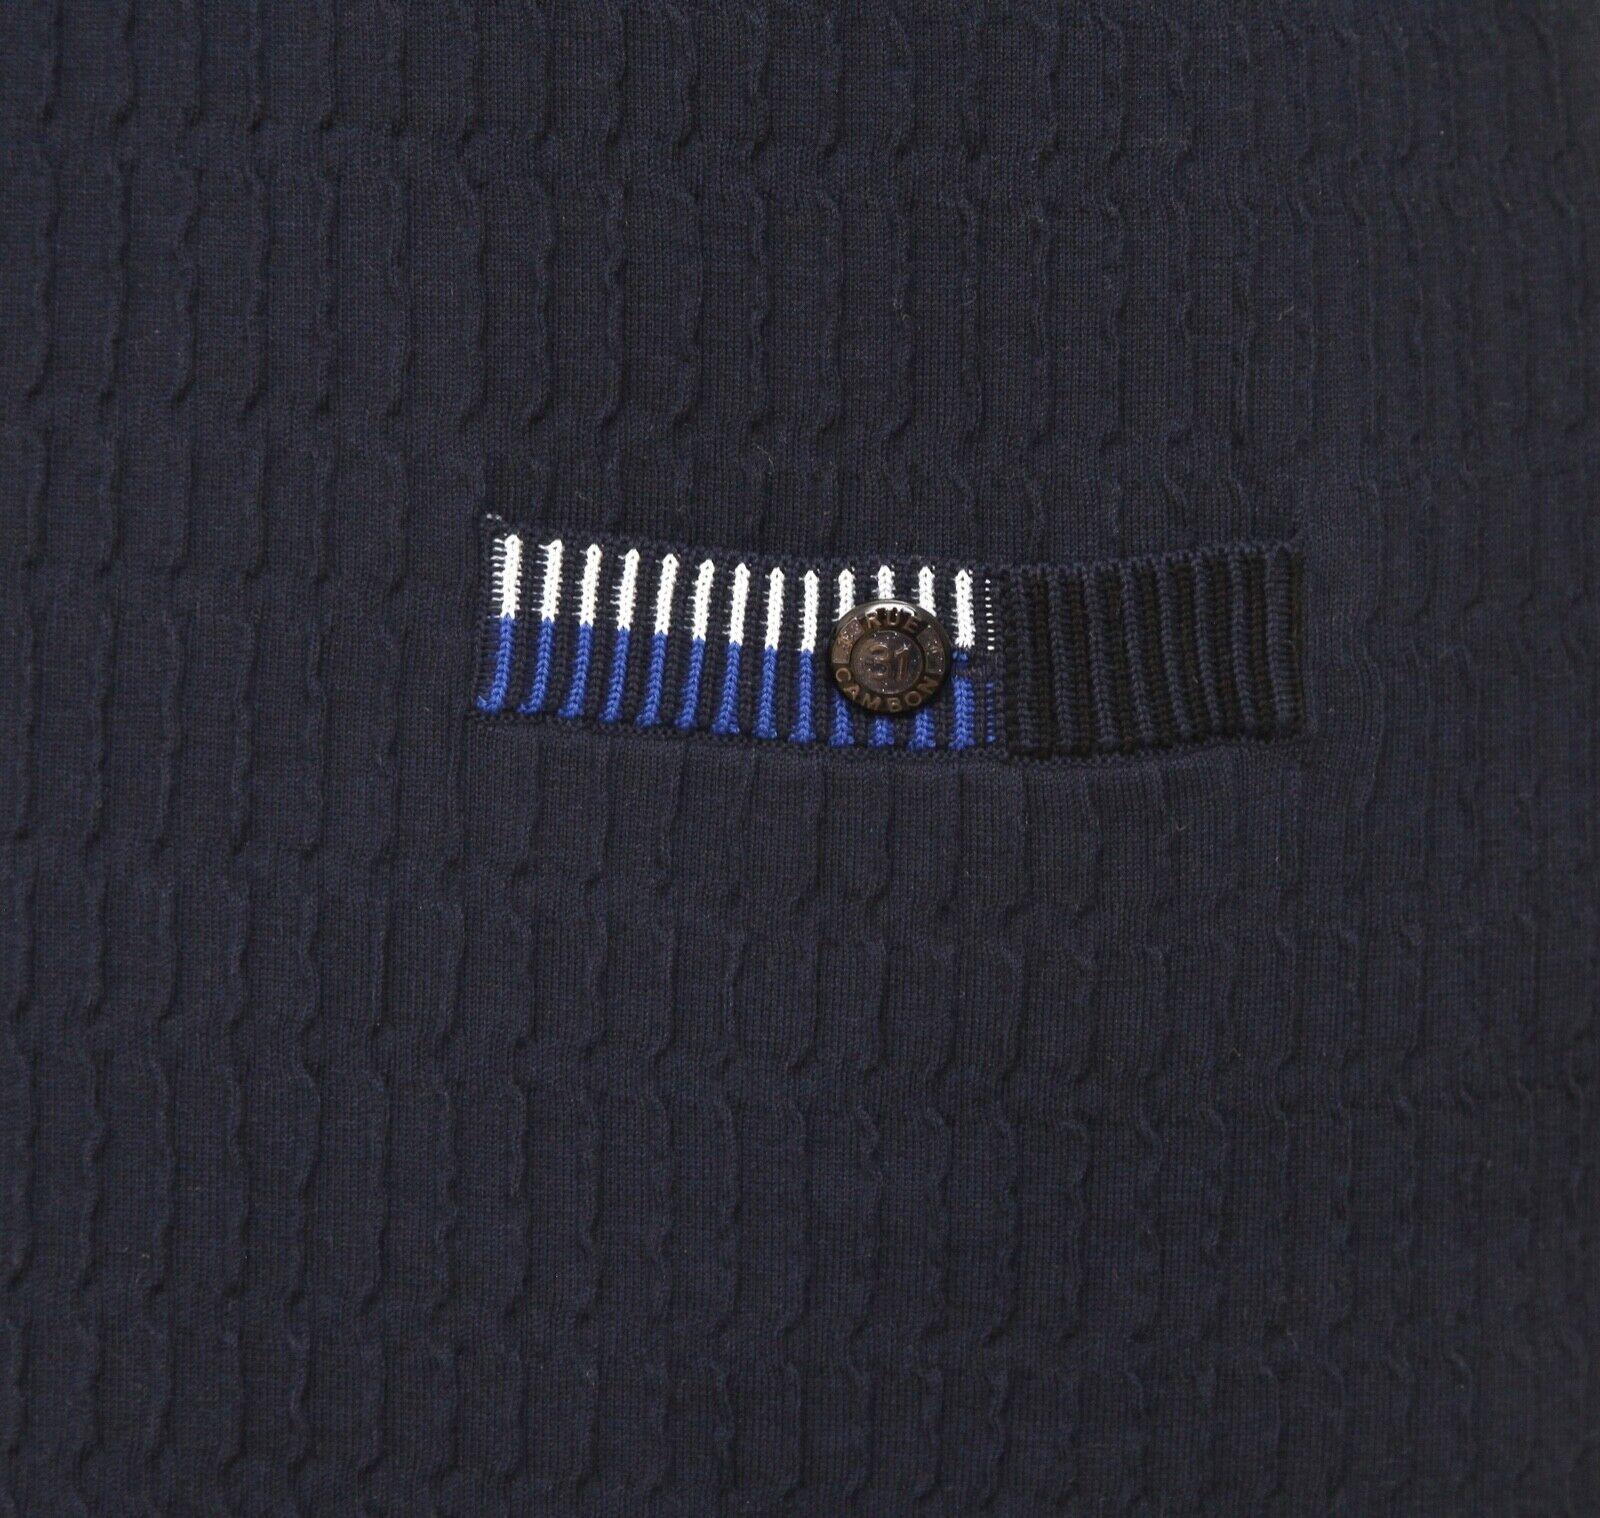 CHANEL Sweater Knit Dress Navy Blue White Short Sleeve Sz 42 2